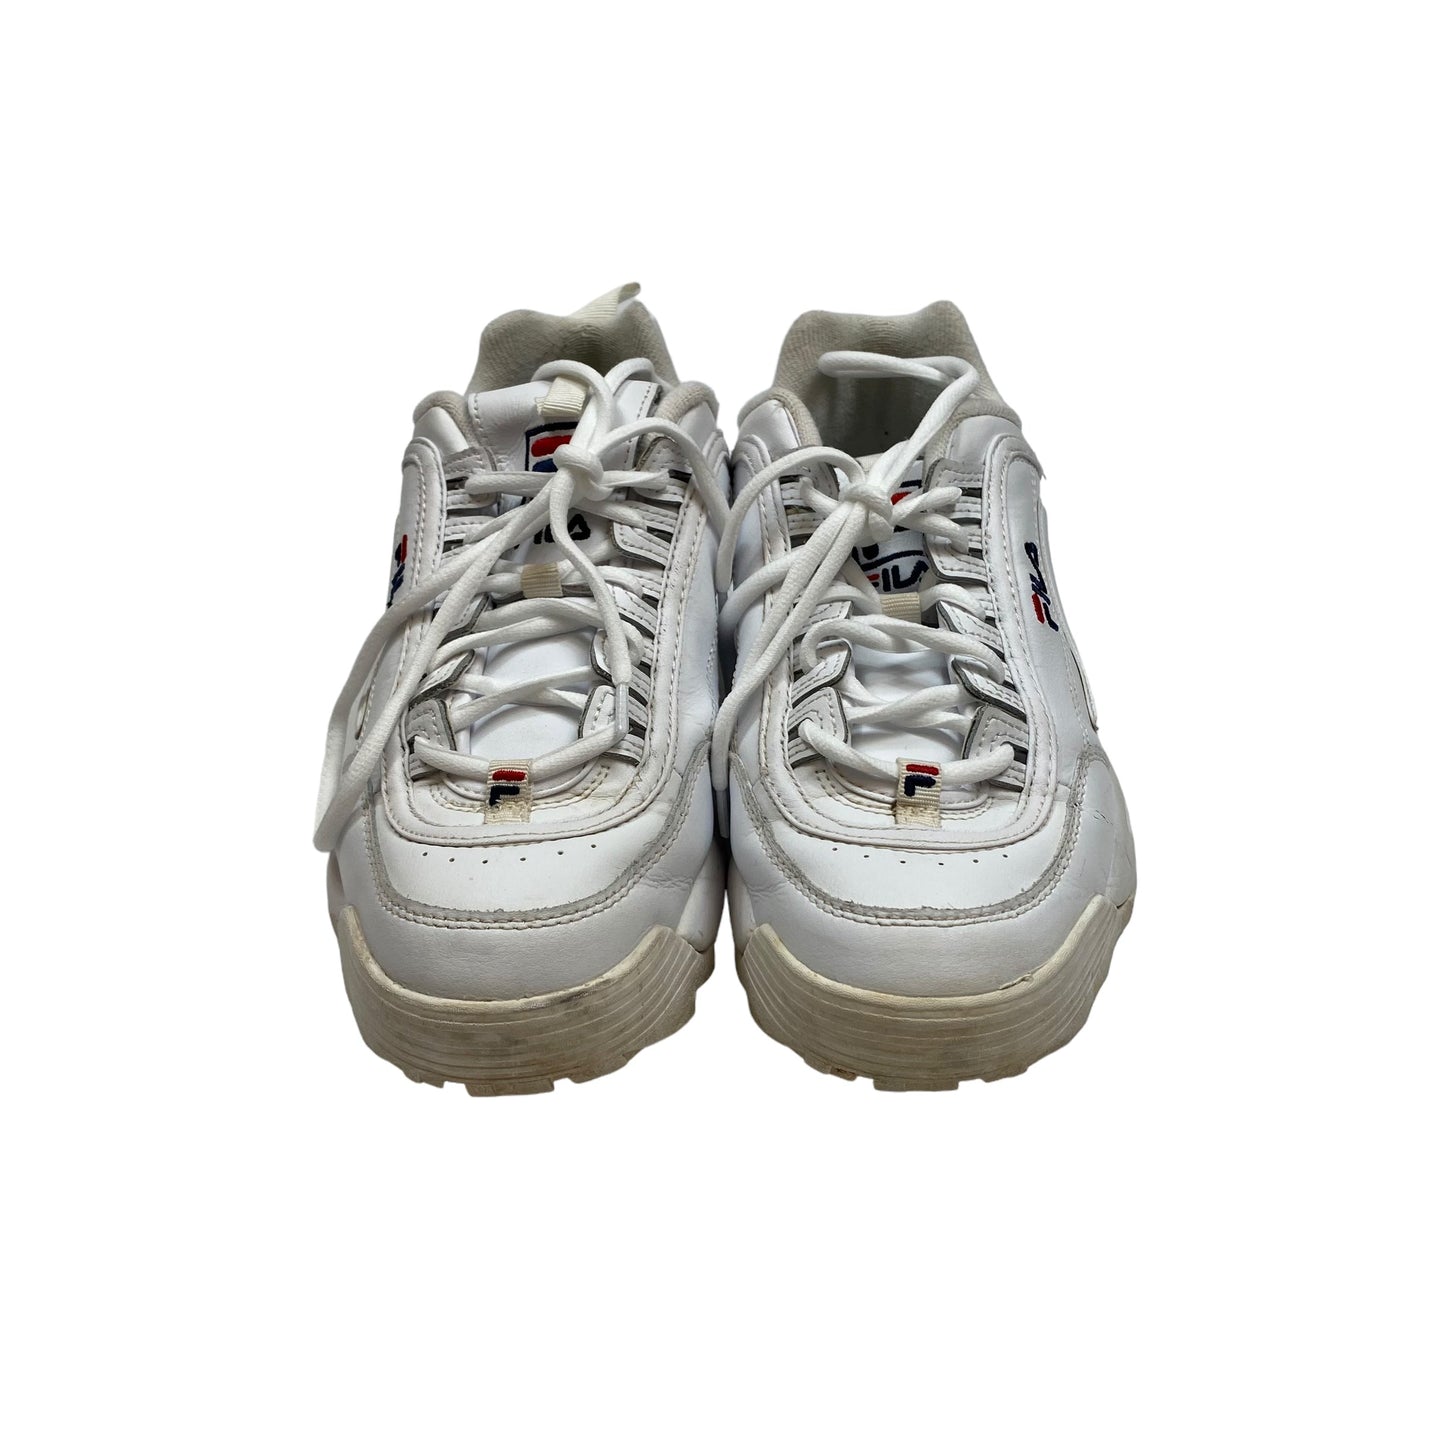 White Shoes Athletic Fila, Size 9